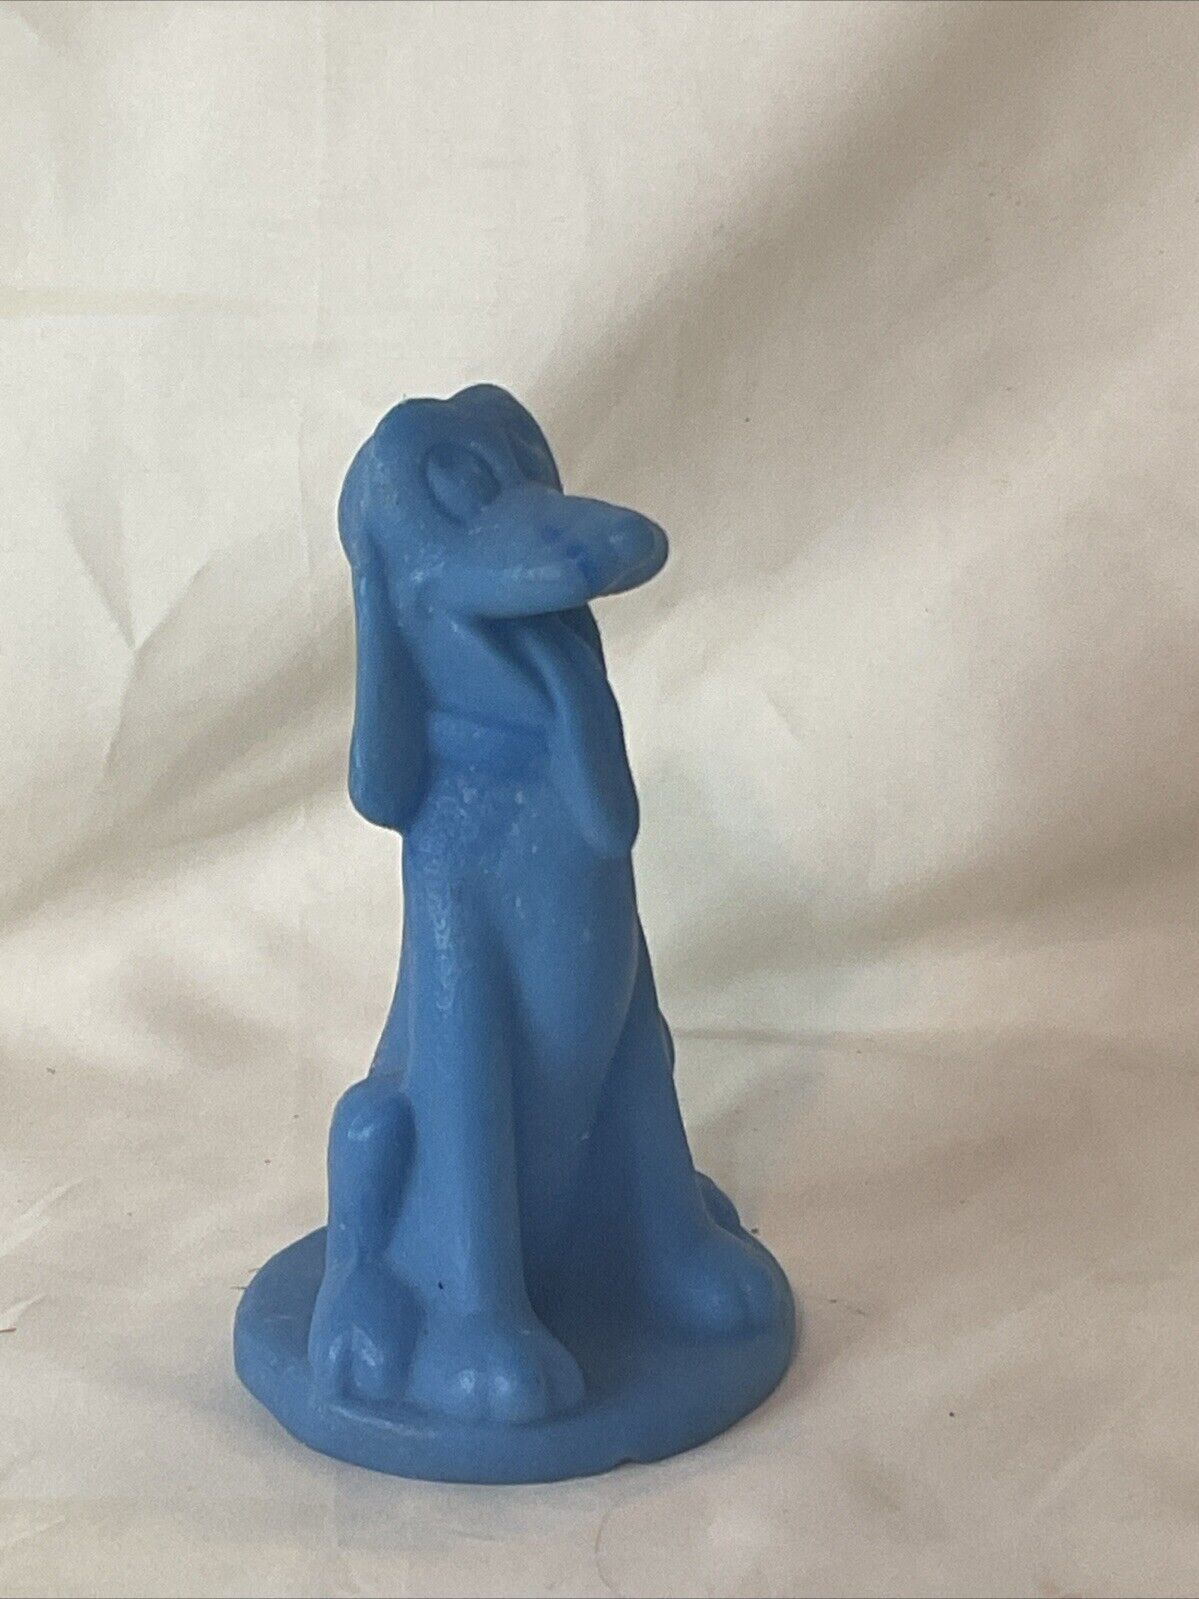 Disney Pluto 5” Mold-a-Rama  Figure Vintage Dog Wax Plastic Toy Blue